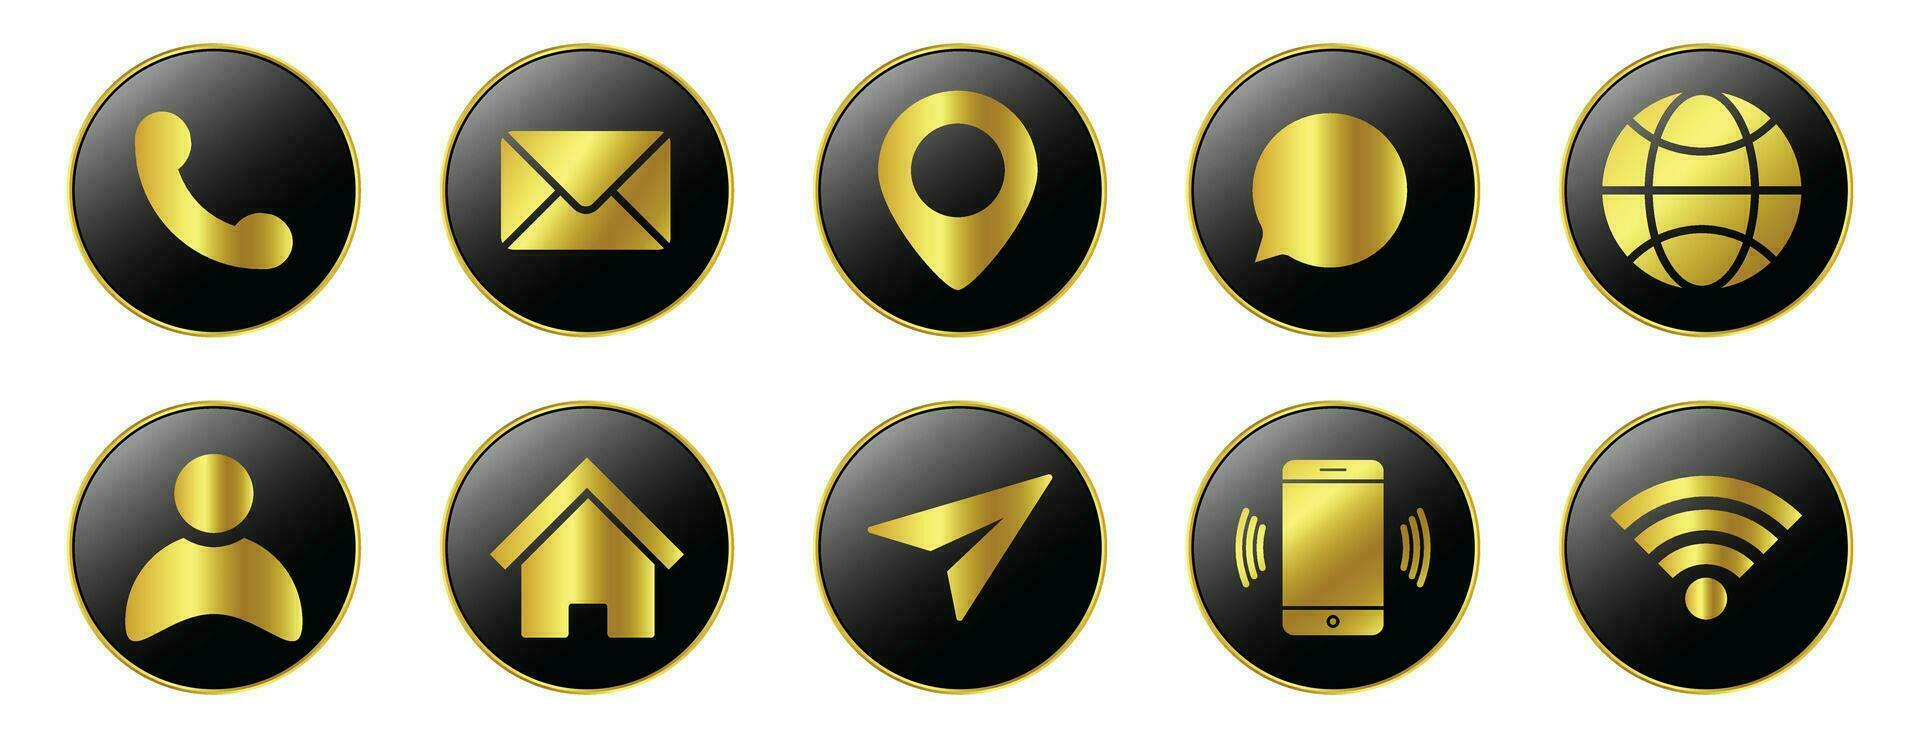 oro contacto nosotros íconos colocar, lustroso contacto icono, moderno tecnología icono conjunto con brillante 3d botón social medios de comunicación símbolo, llamar, hogar botón, mensaje, sitio web, Wifi, ui ux empujar botón vector